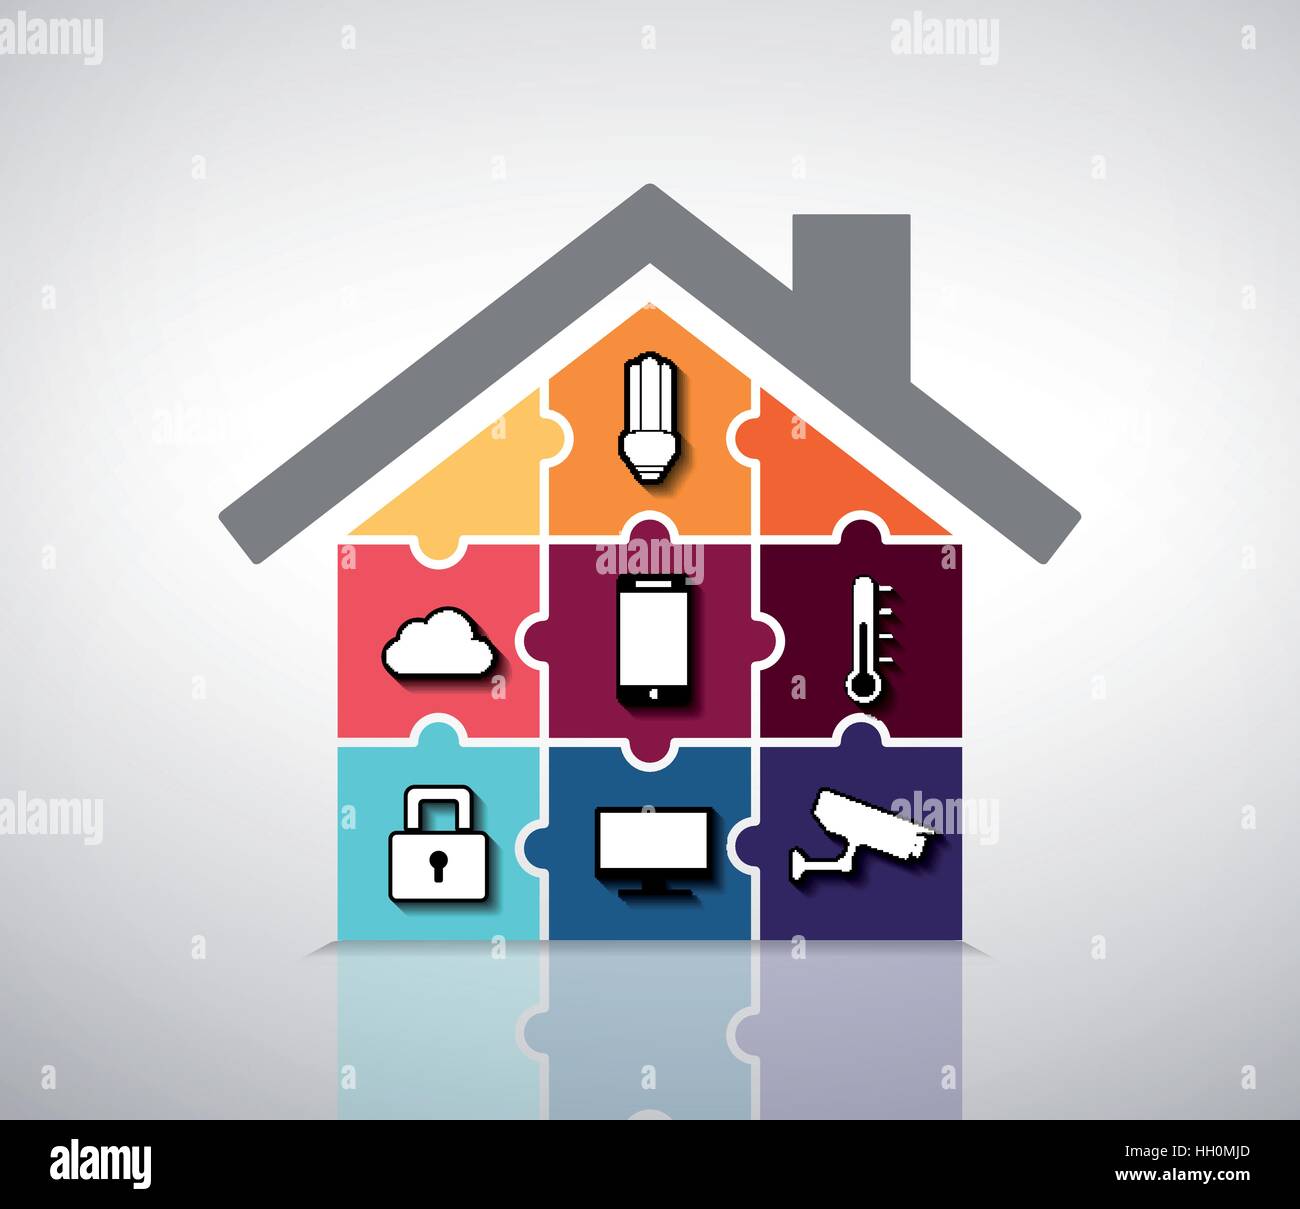 Home automation system - casa inteligent management Illustrazione Vettoriale